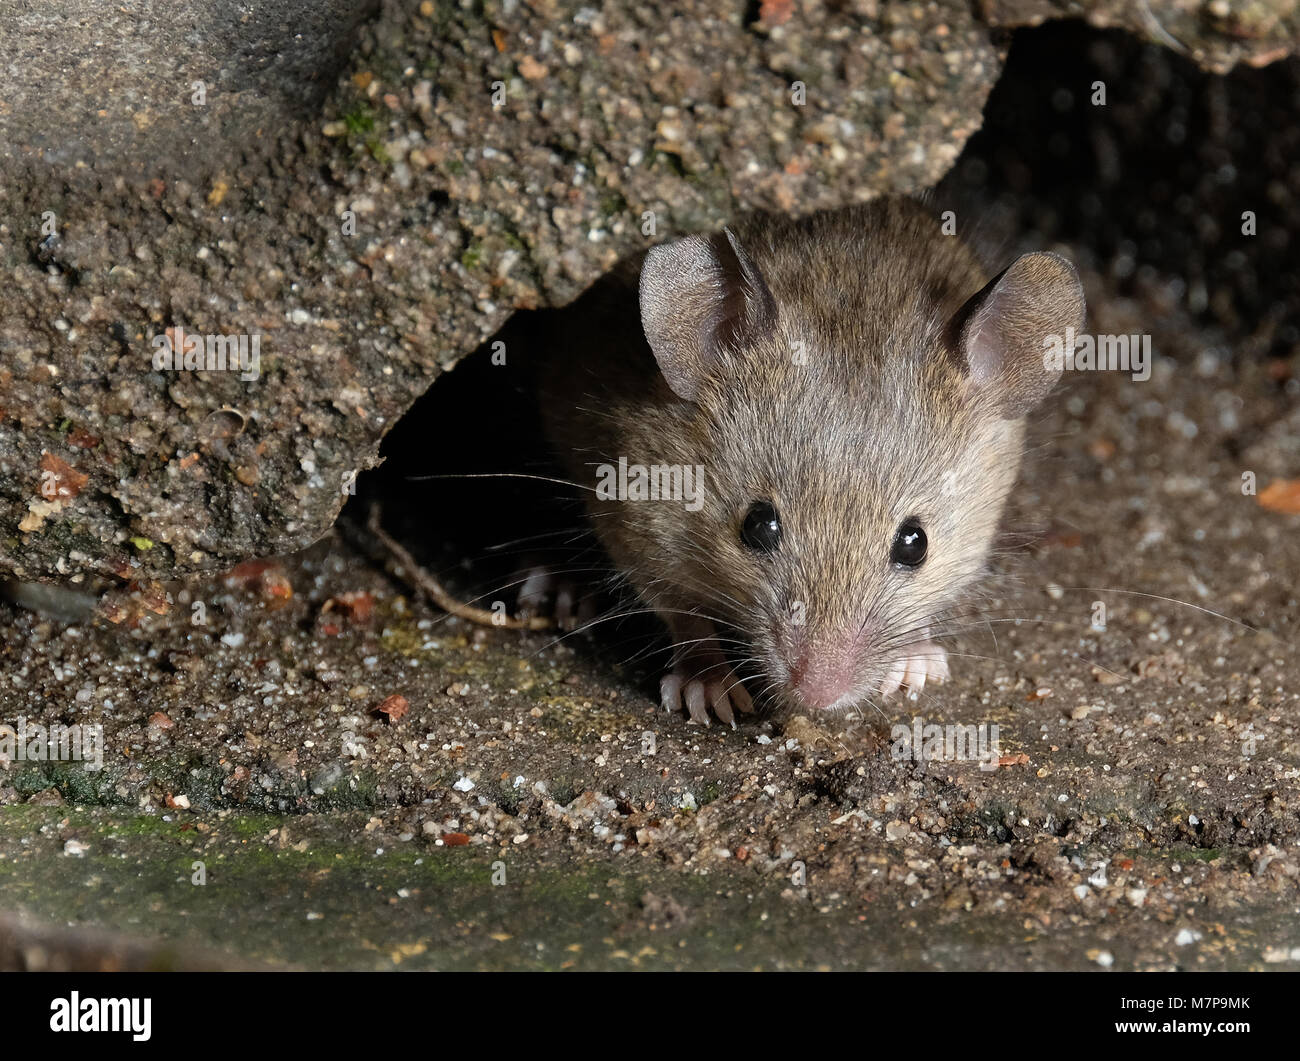 Mice feeding in urban house garden. Stock Photo